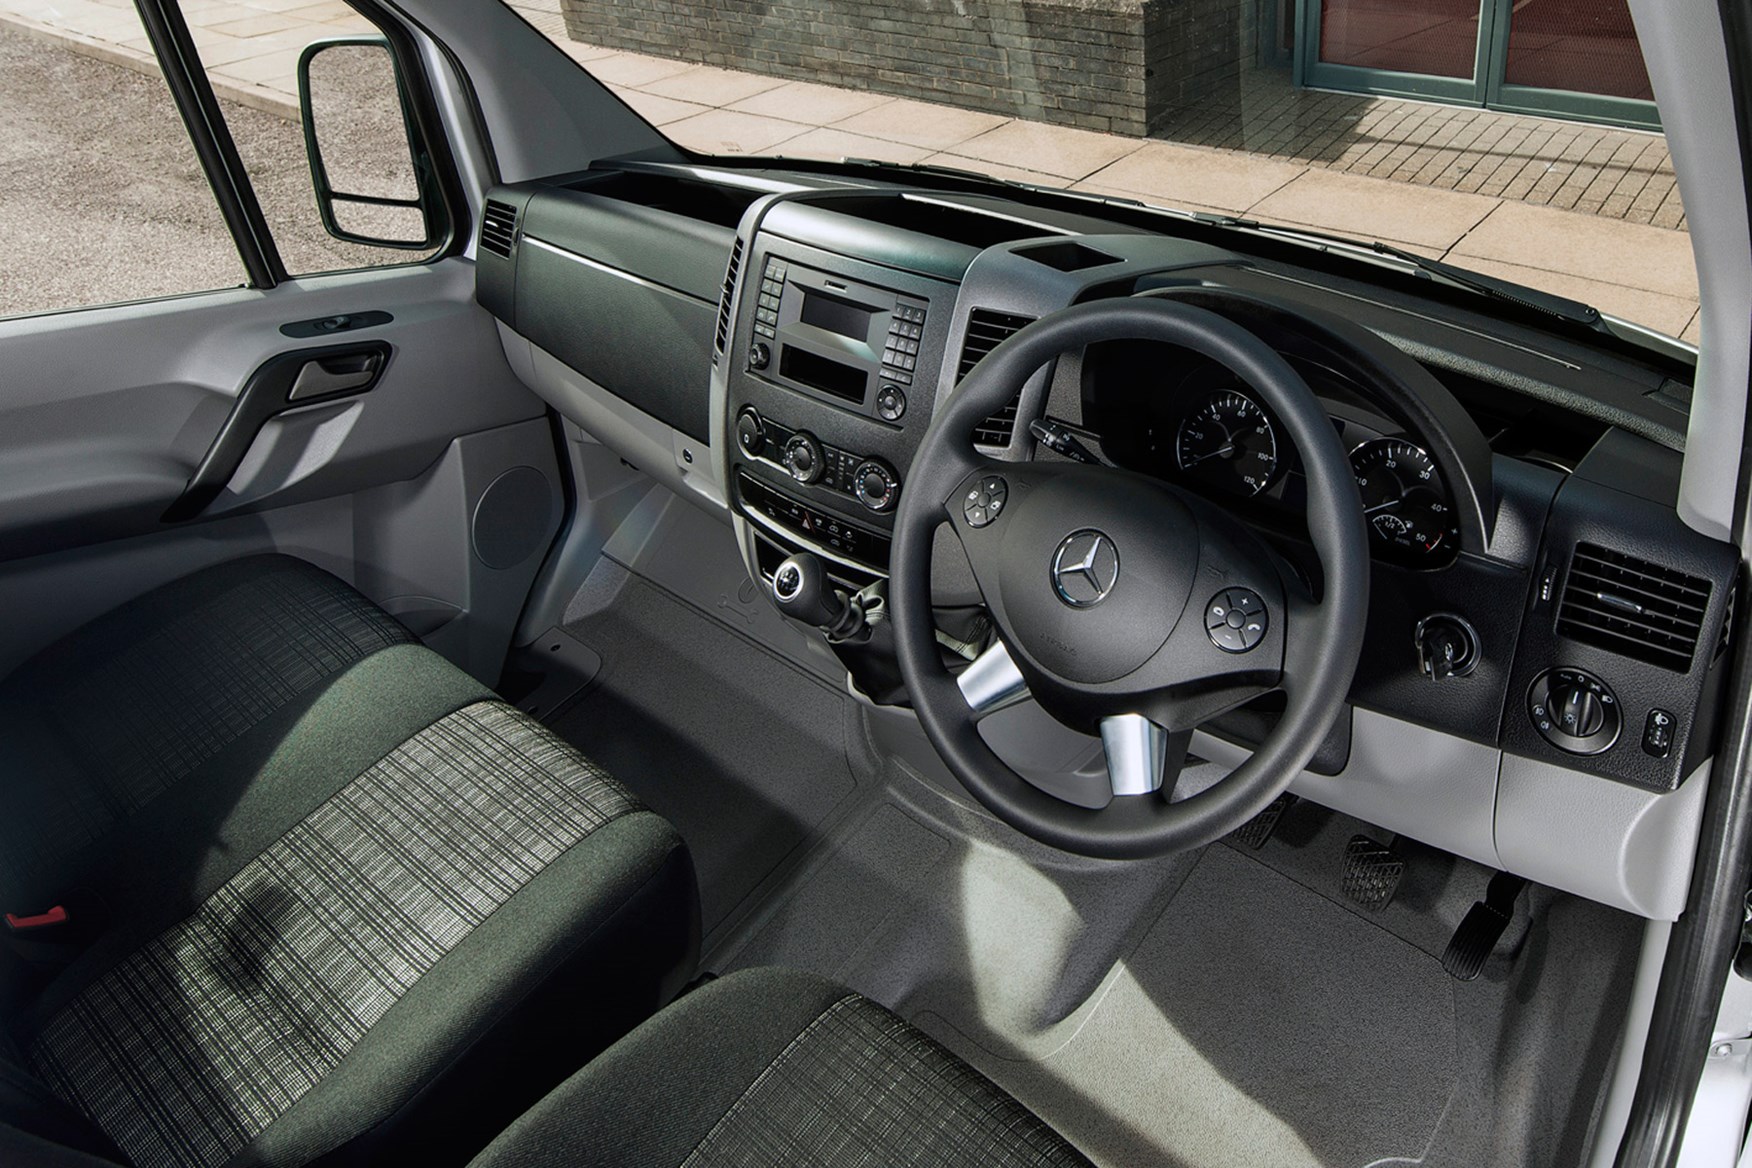 Mercedes-Benz Sprinter full review on Parkers Vans - cabin